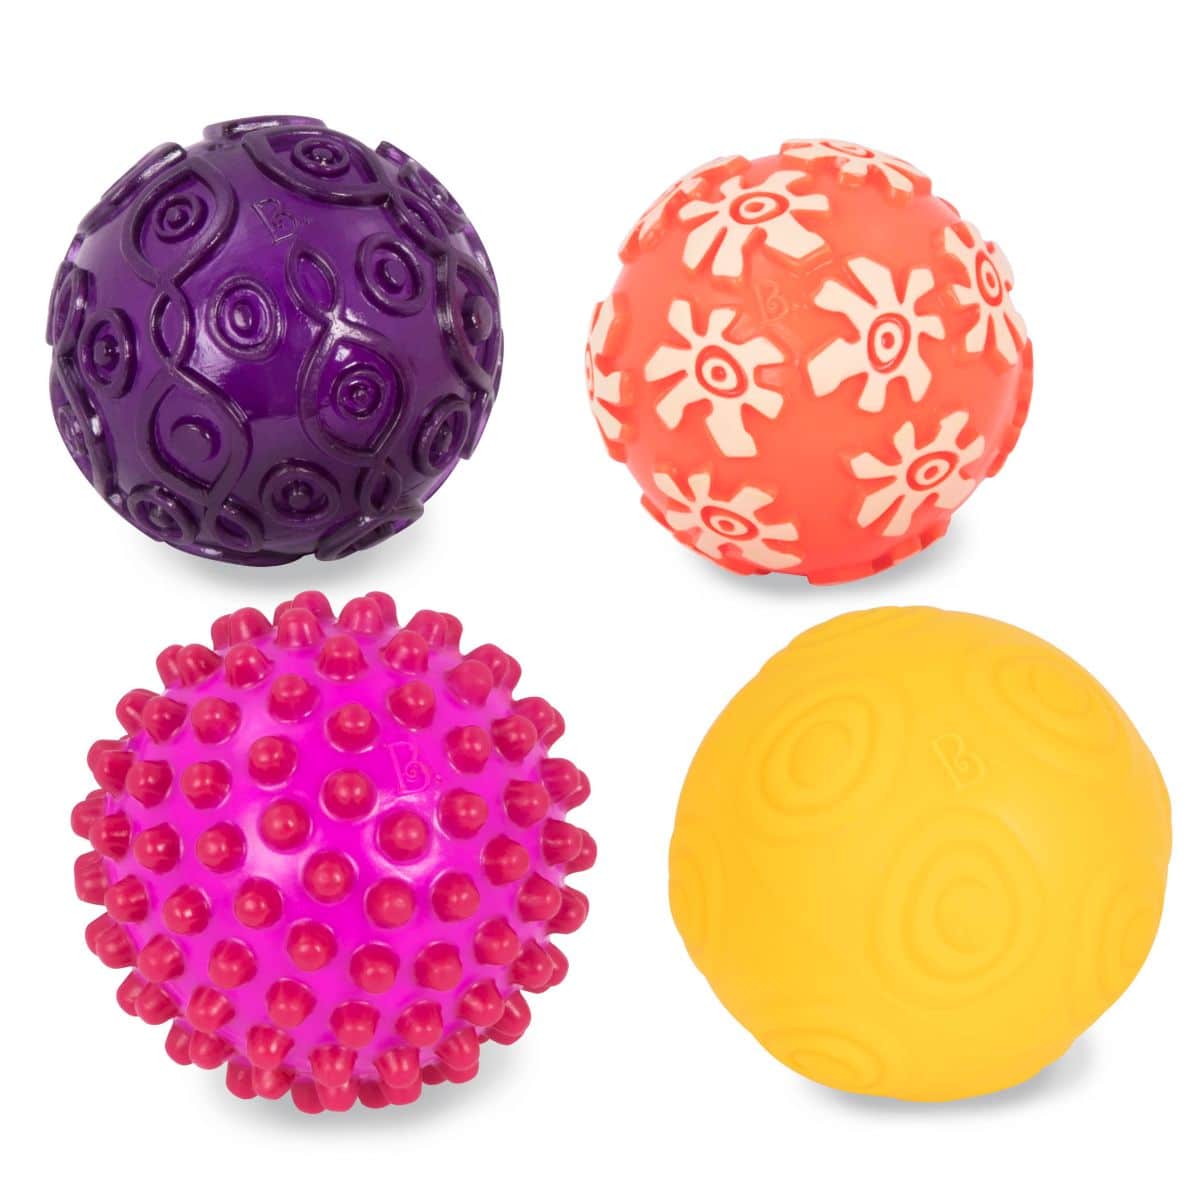 Sensory toy balls